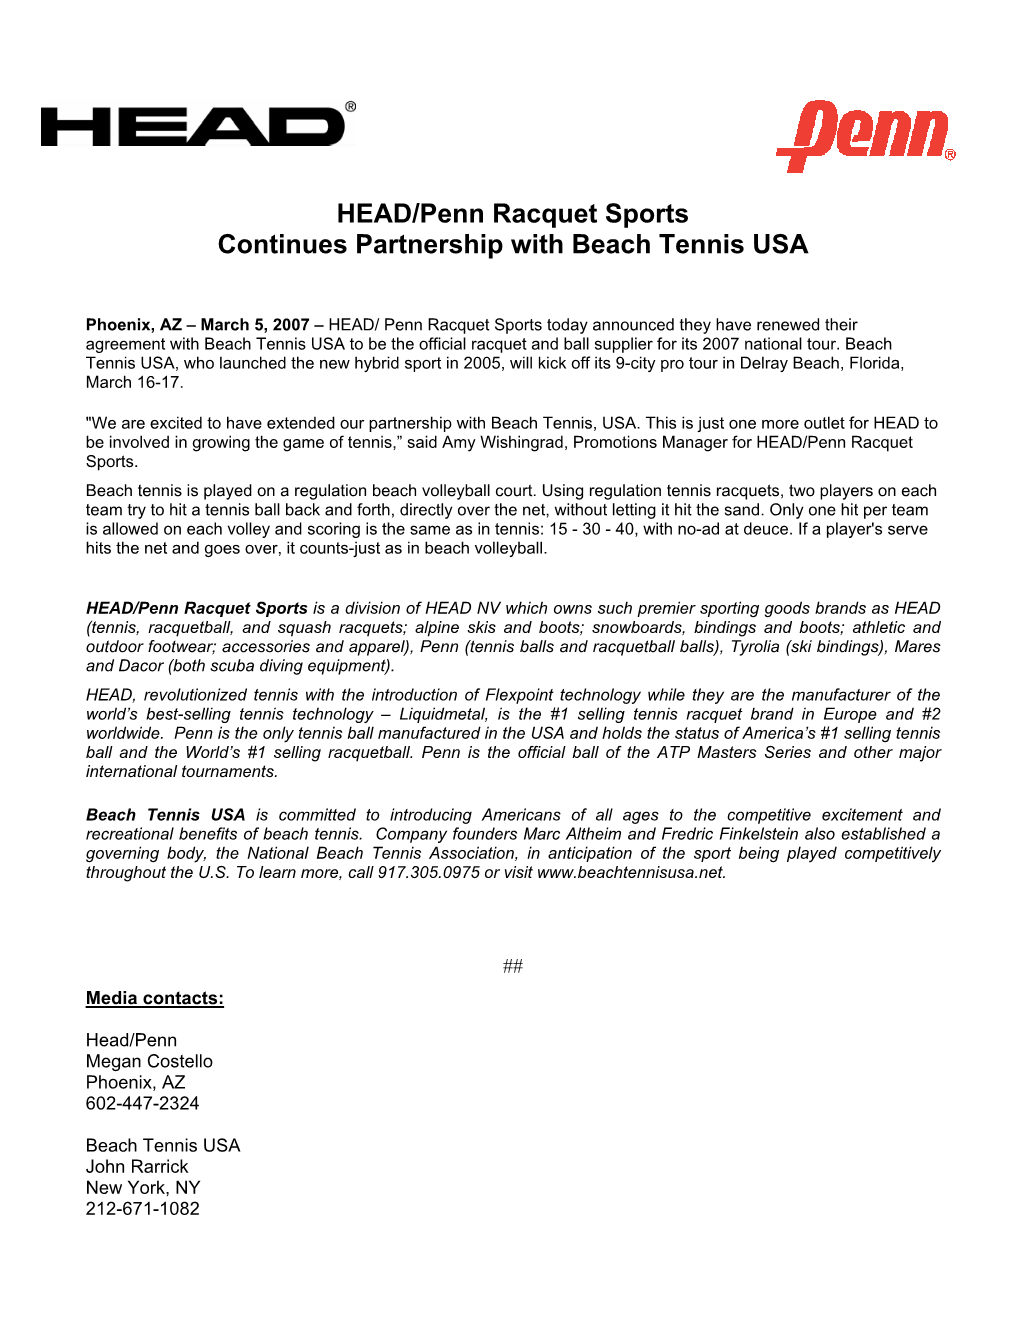 HEAD/Penn Racquet Sports Continues Partnership with Beach Tennis USA